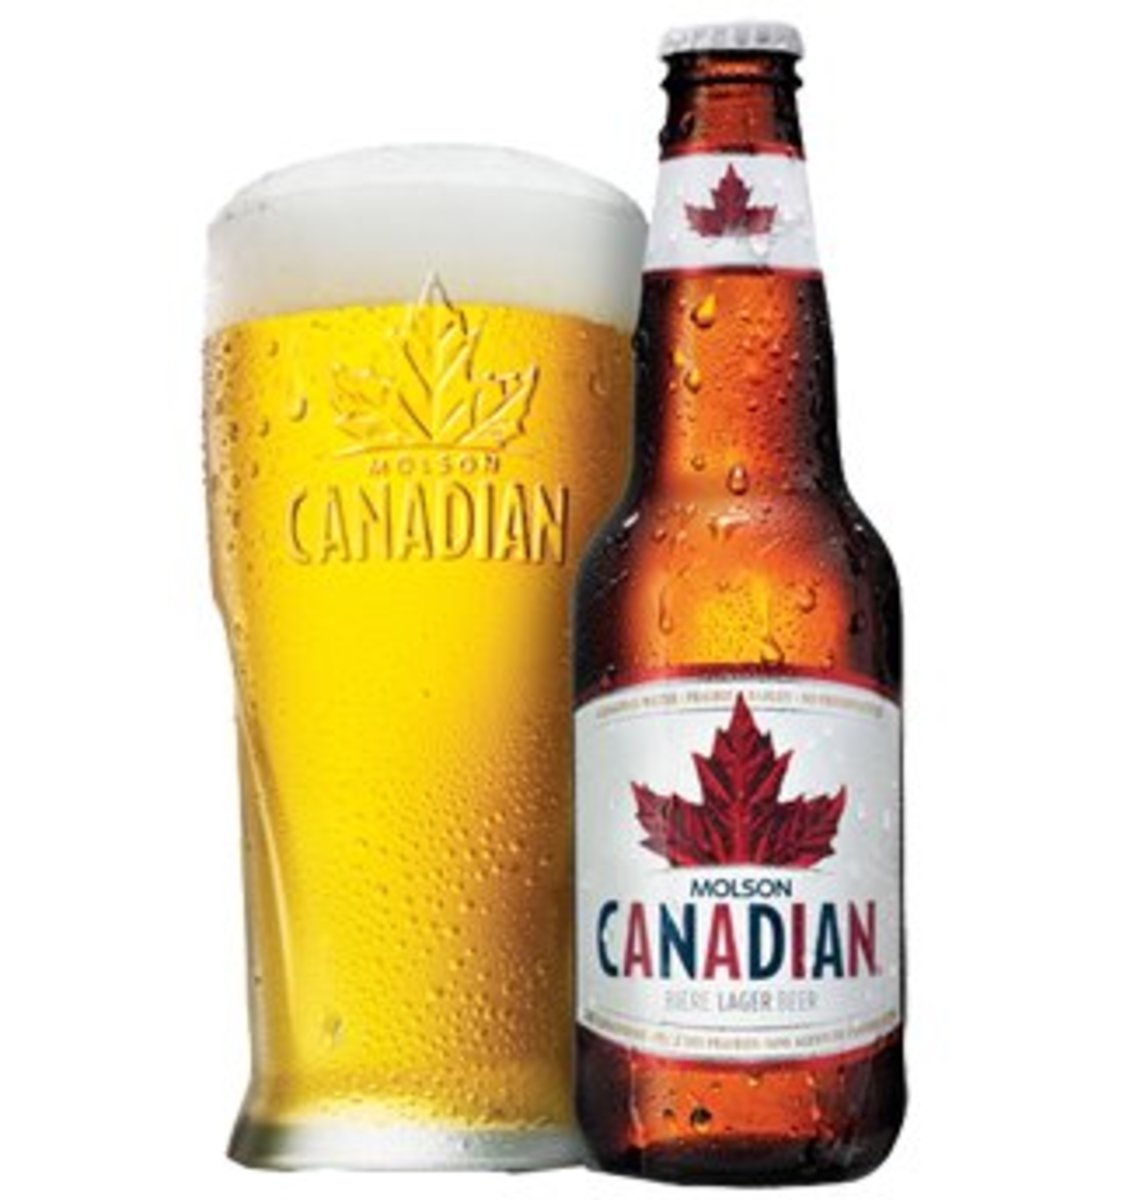 canadian-beer-molson-labatt-and-moosehead-some-history